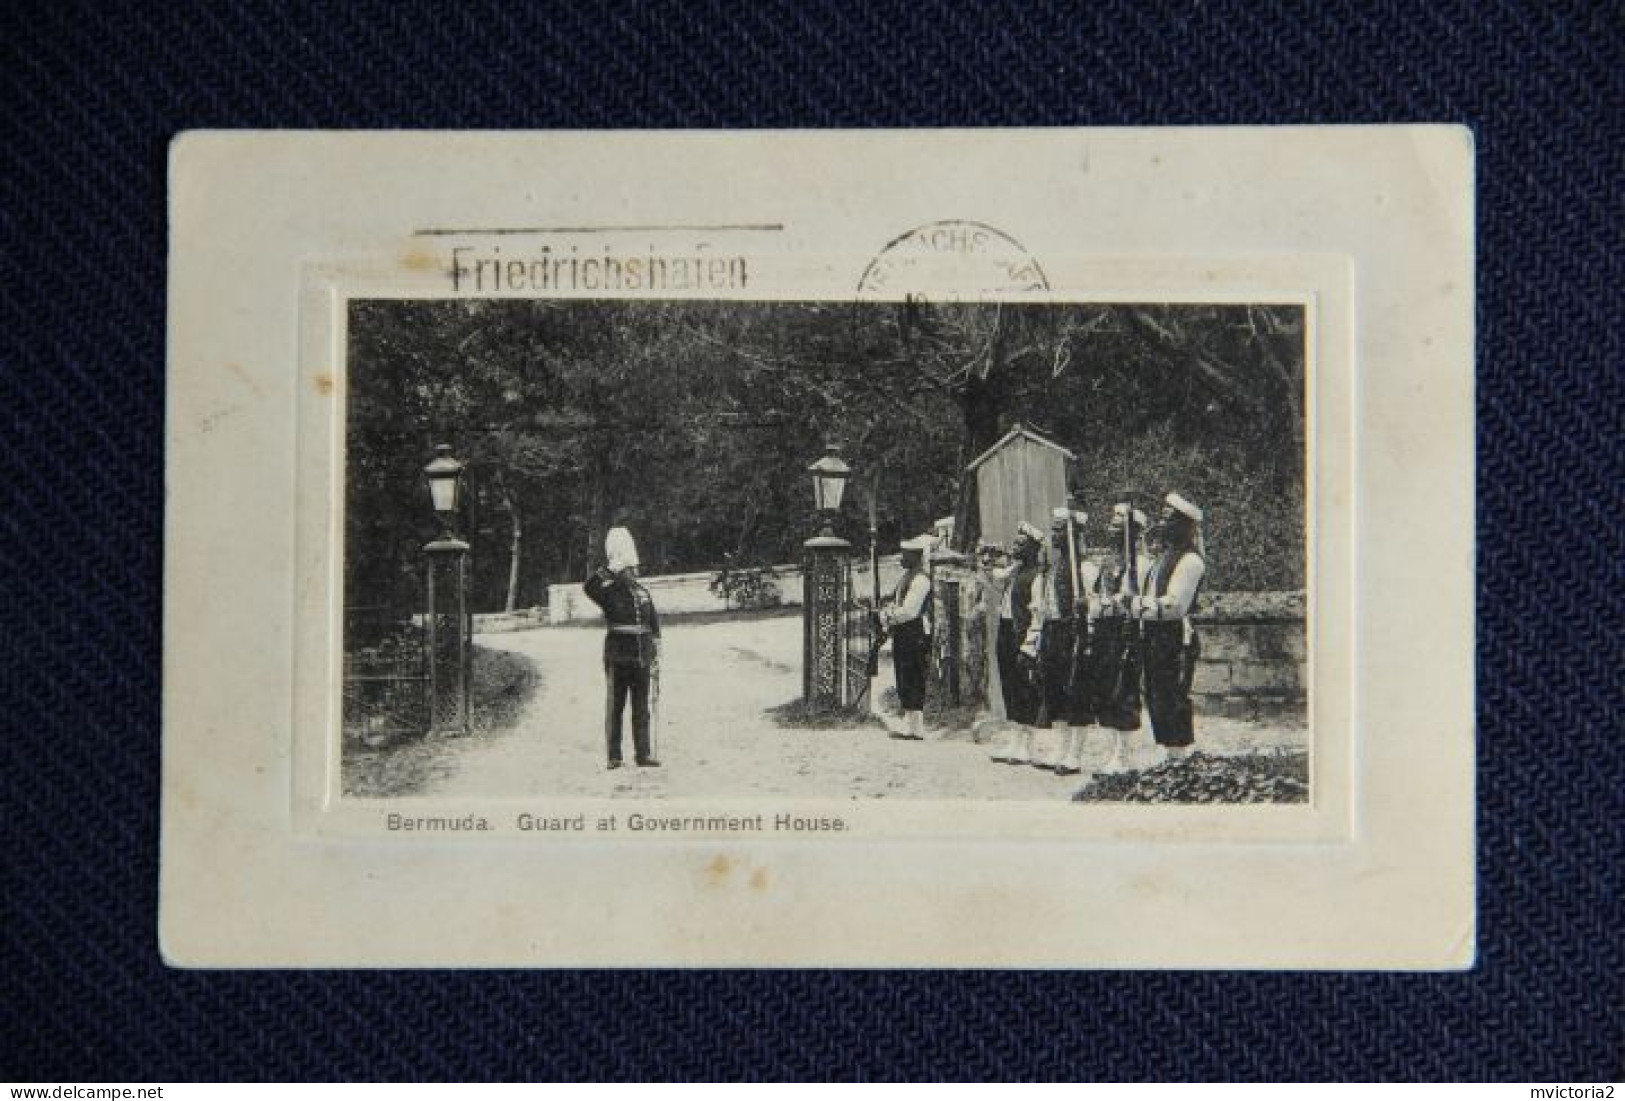 Carte Postale ayant voyagée By GRAF ZEPPELIN  LZ 127 ( 1929 )